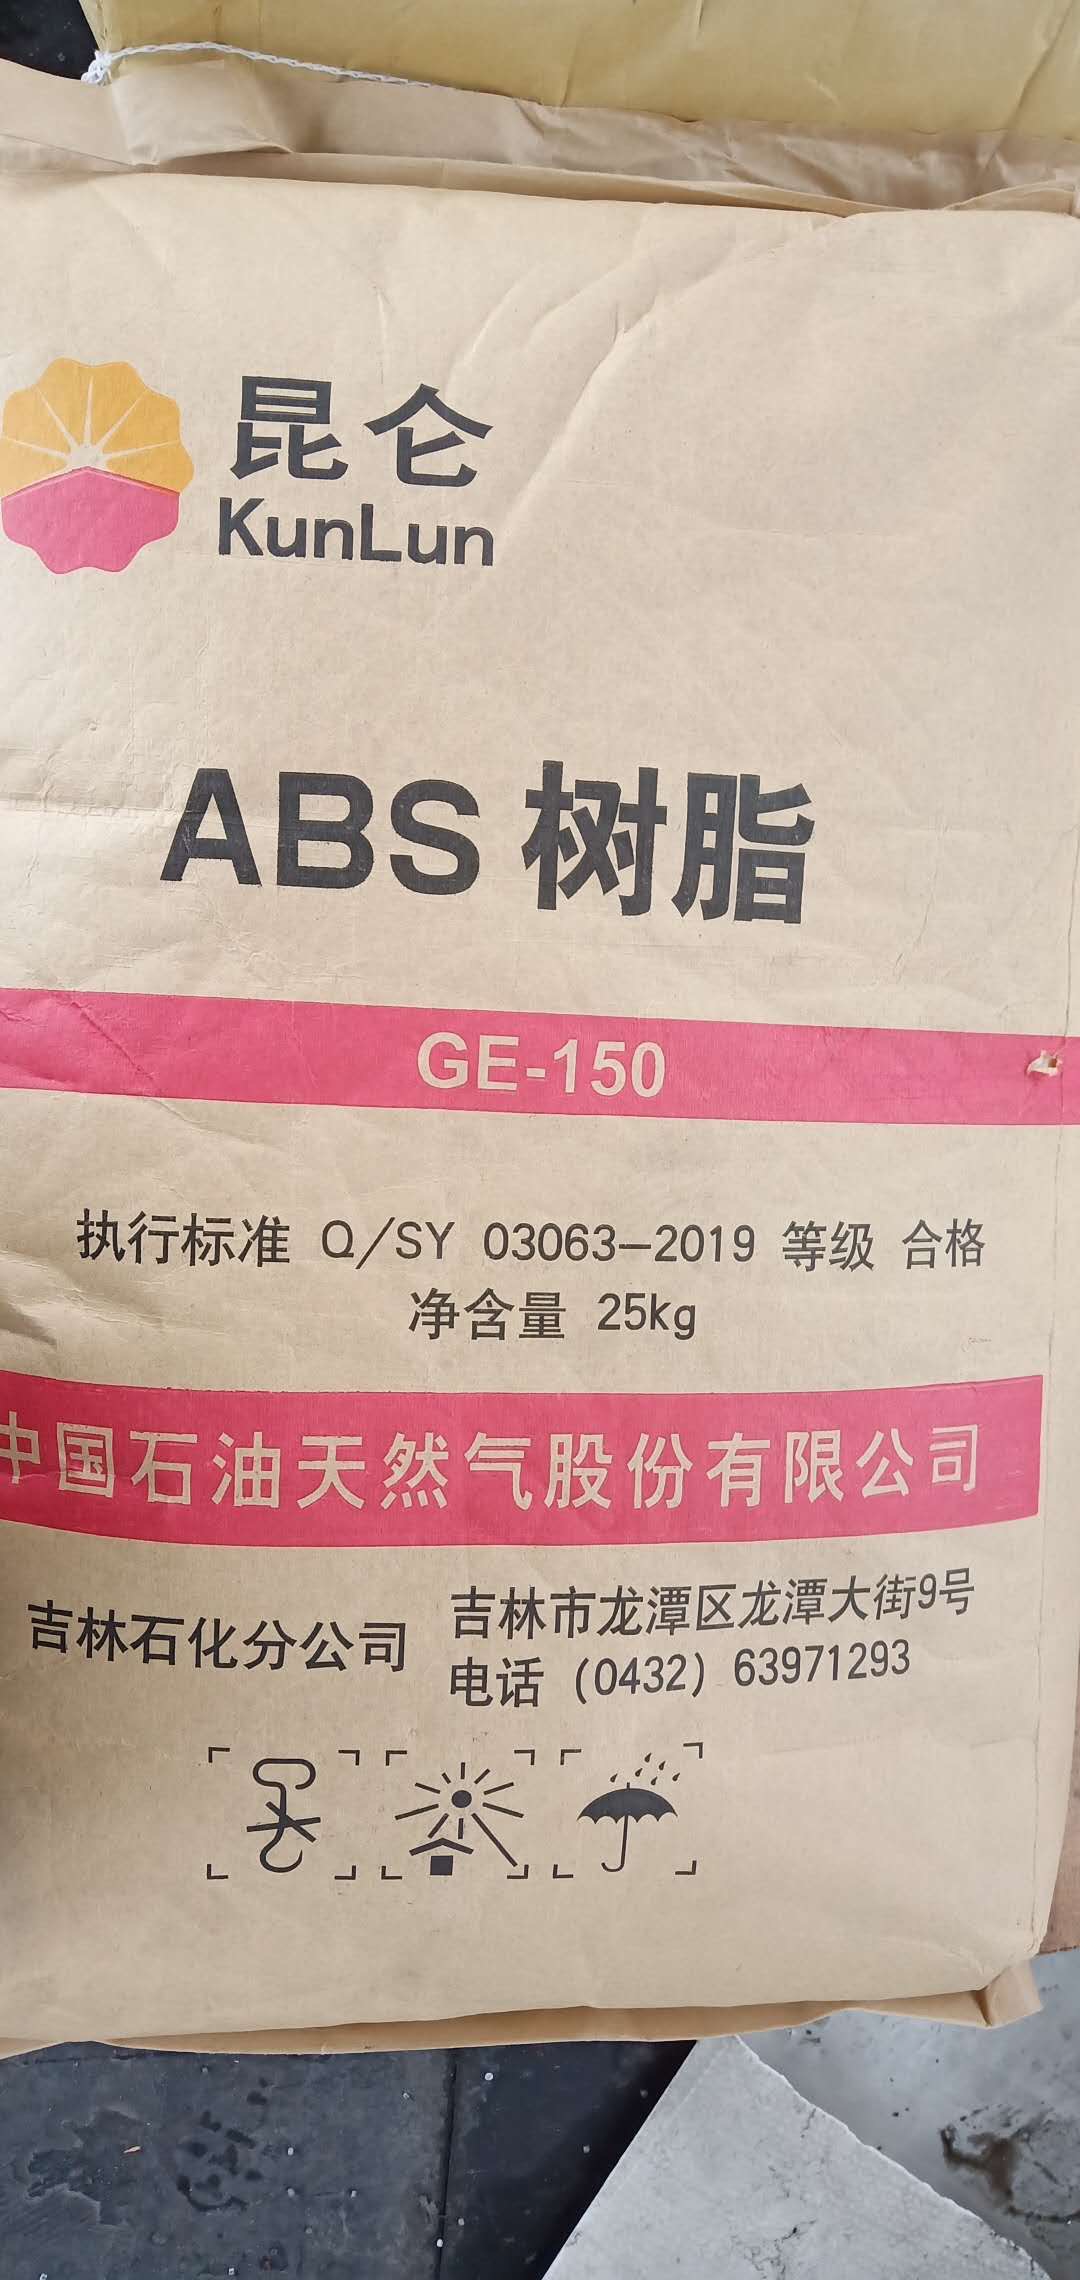 GE-150 中石油吉林 昆仑ABS树脂20209A-5图